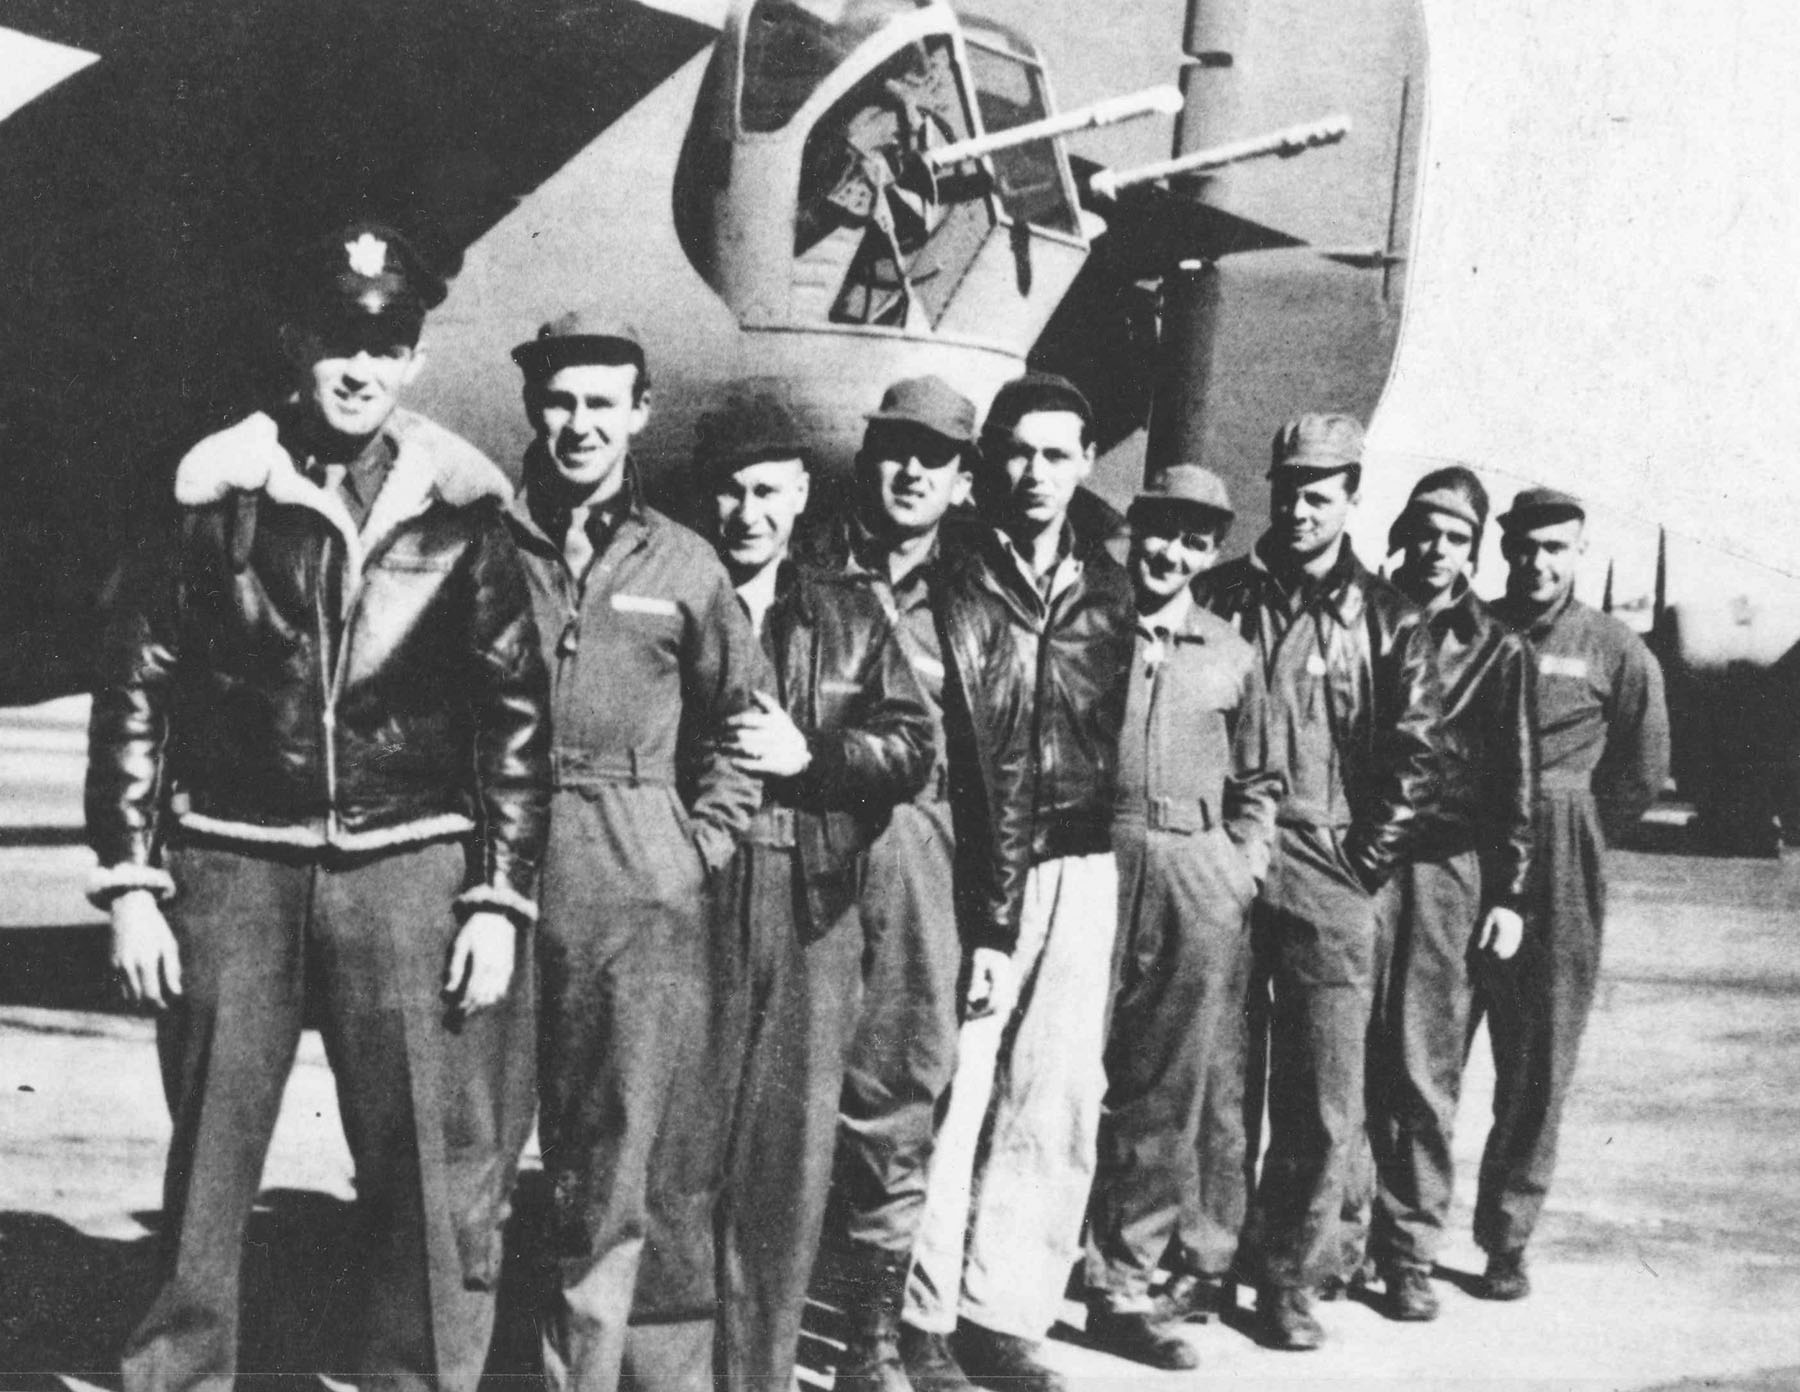 The ill-fated crew of the Lady Be Good, from the left: 1Lt. W.J. Hatton, pilot; 2Lt. R.F. Toner, copilot; 2Lt. D.P. Hays, navigator; 2Lt. J.S. Woravka, bombardier; TSgt. H.J. Ripslinger, engineer; TSgt. R.E. LaMotte, radio operator; SSgt. G.E. Shelly, gunner; SSgt. V.L. Moore, gunner; and SSgt. S.E. Adams, gunner. (U.S. Air Force photo)